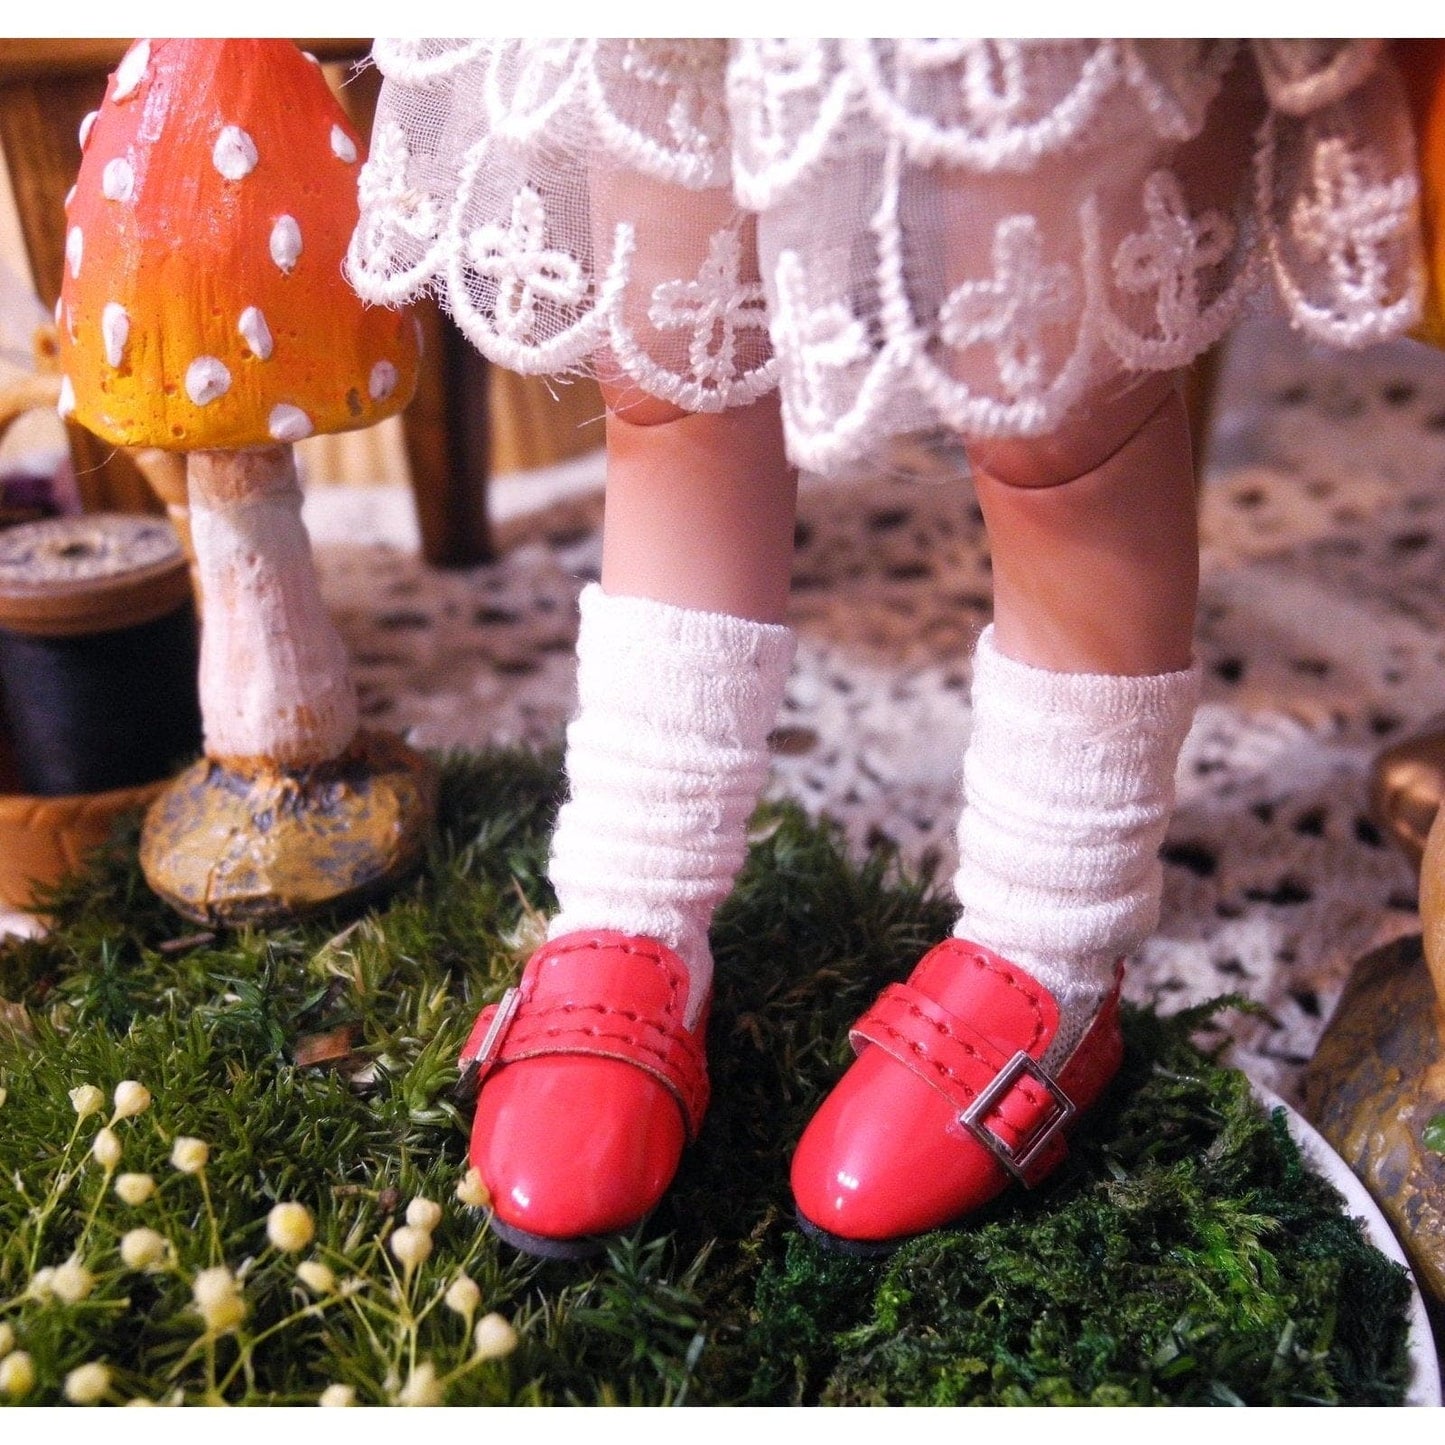 【Fatiao Doll Shop】方釦漆皮鞋 / OB22~OB26 AZONE PNXS~M iMda 1.7 BJD 8分